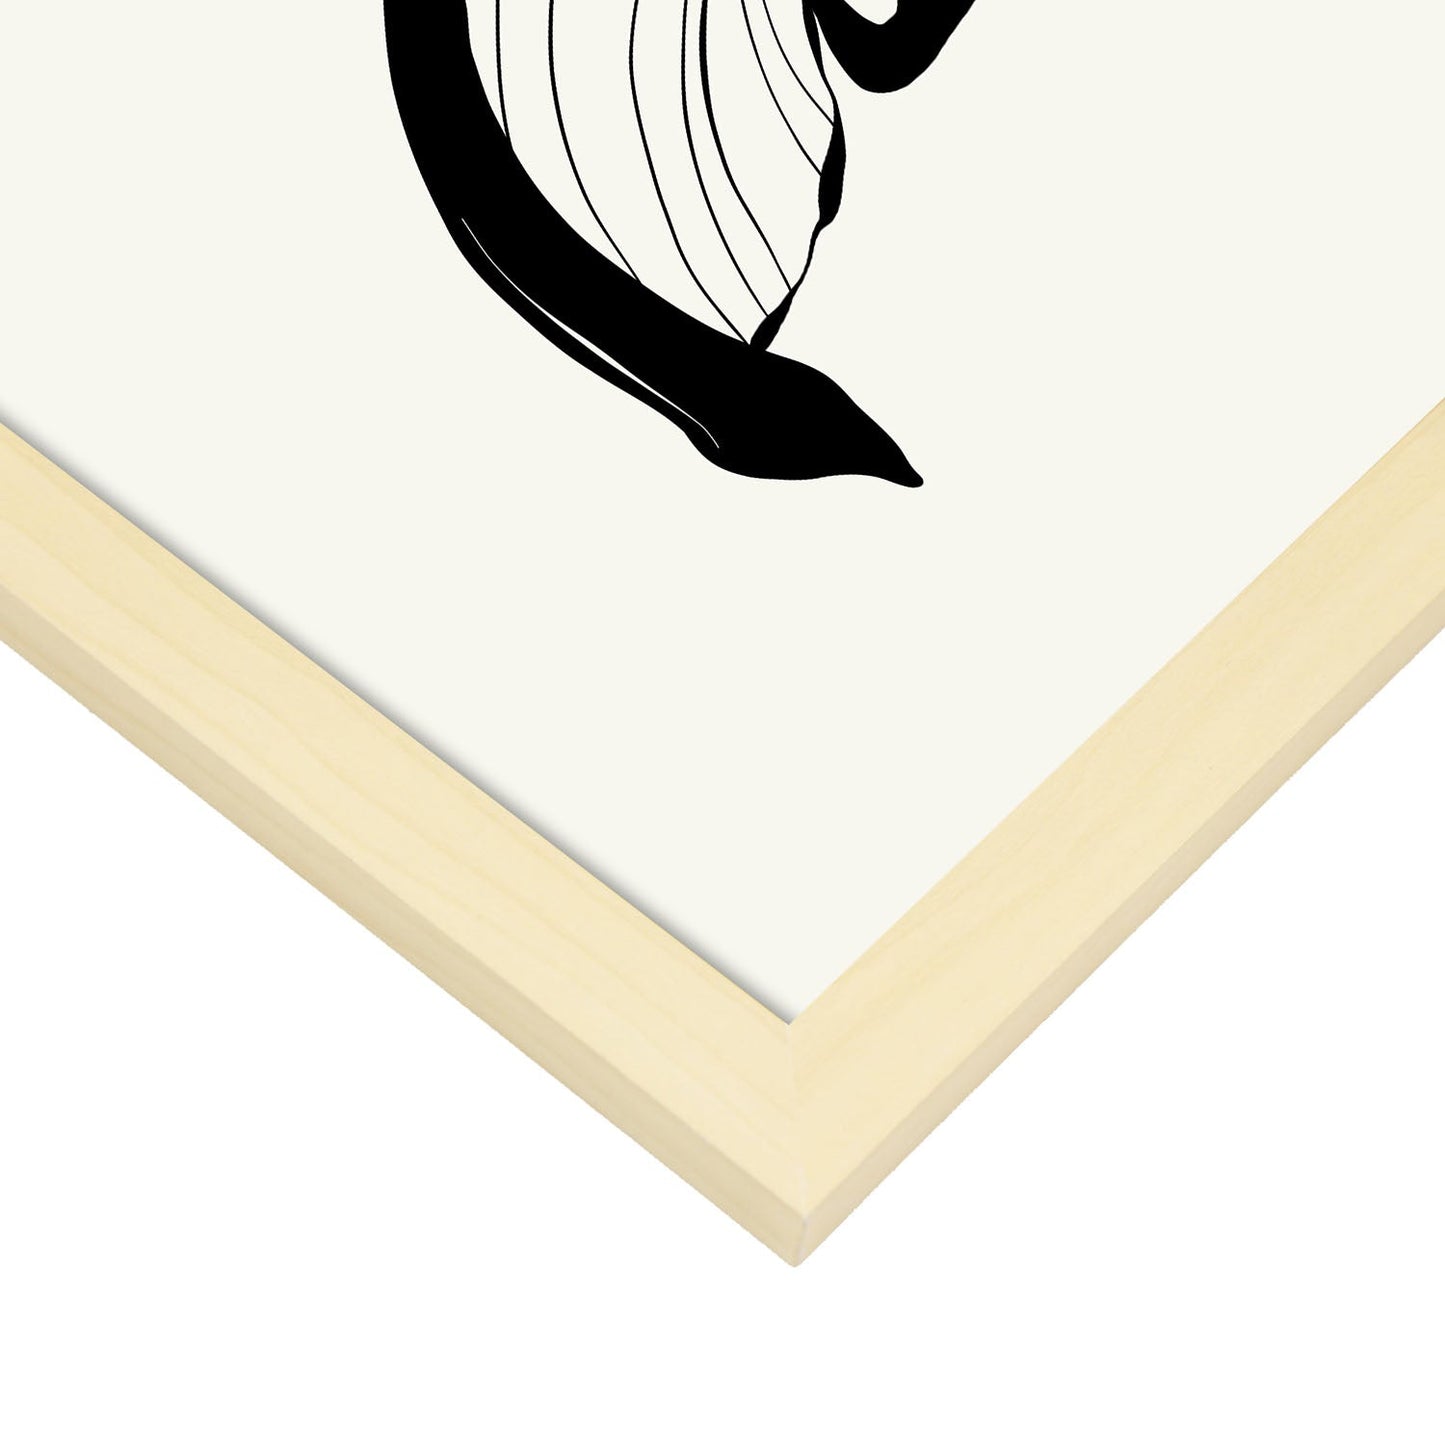 Whale tail-Artwork-Nacnic-Nacnic Estudio SL